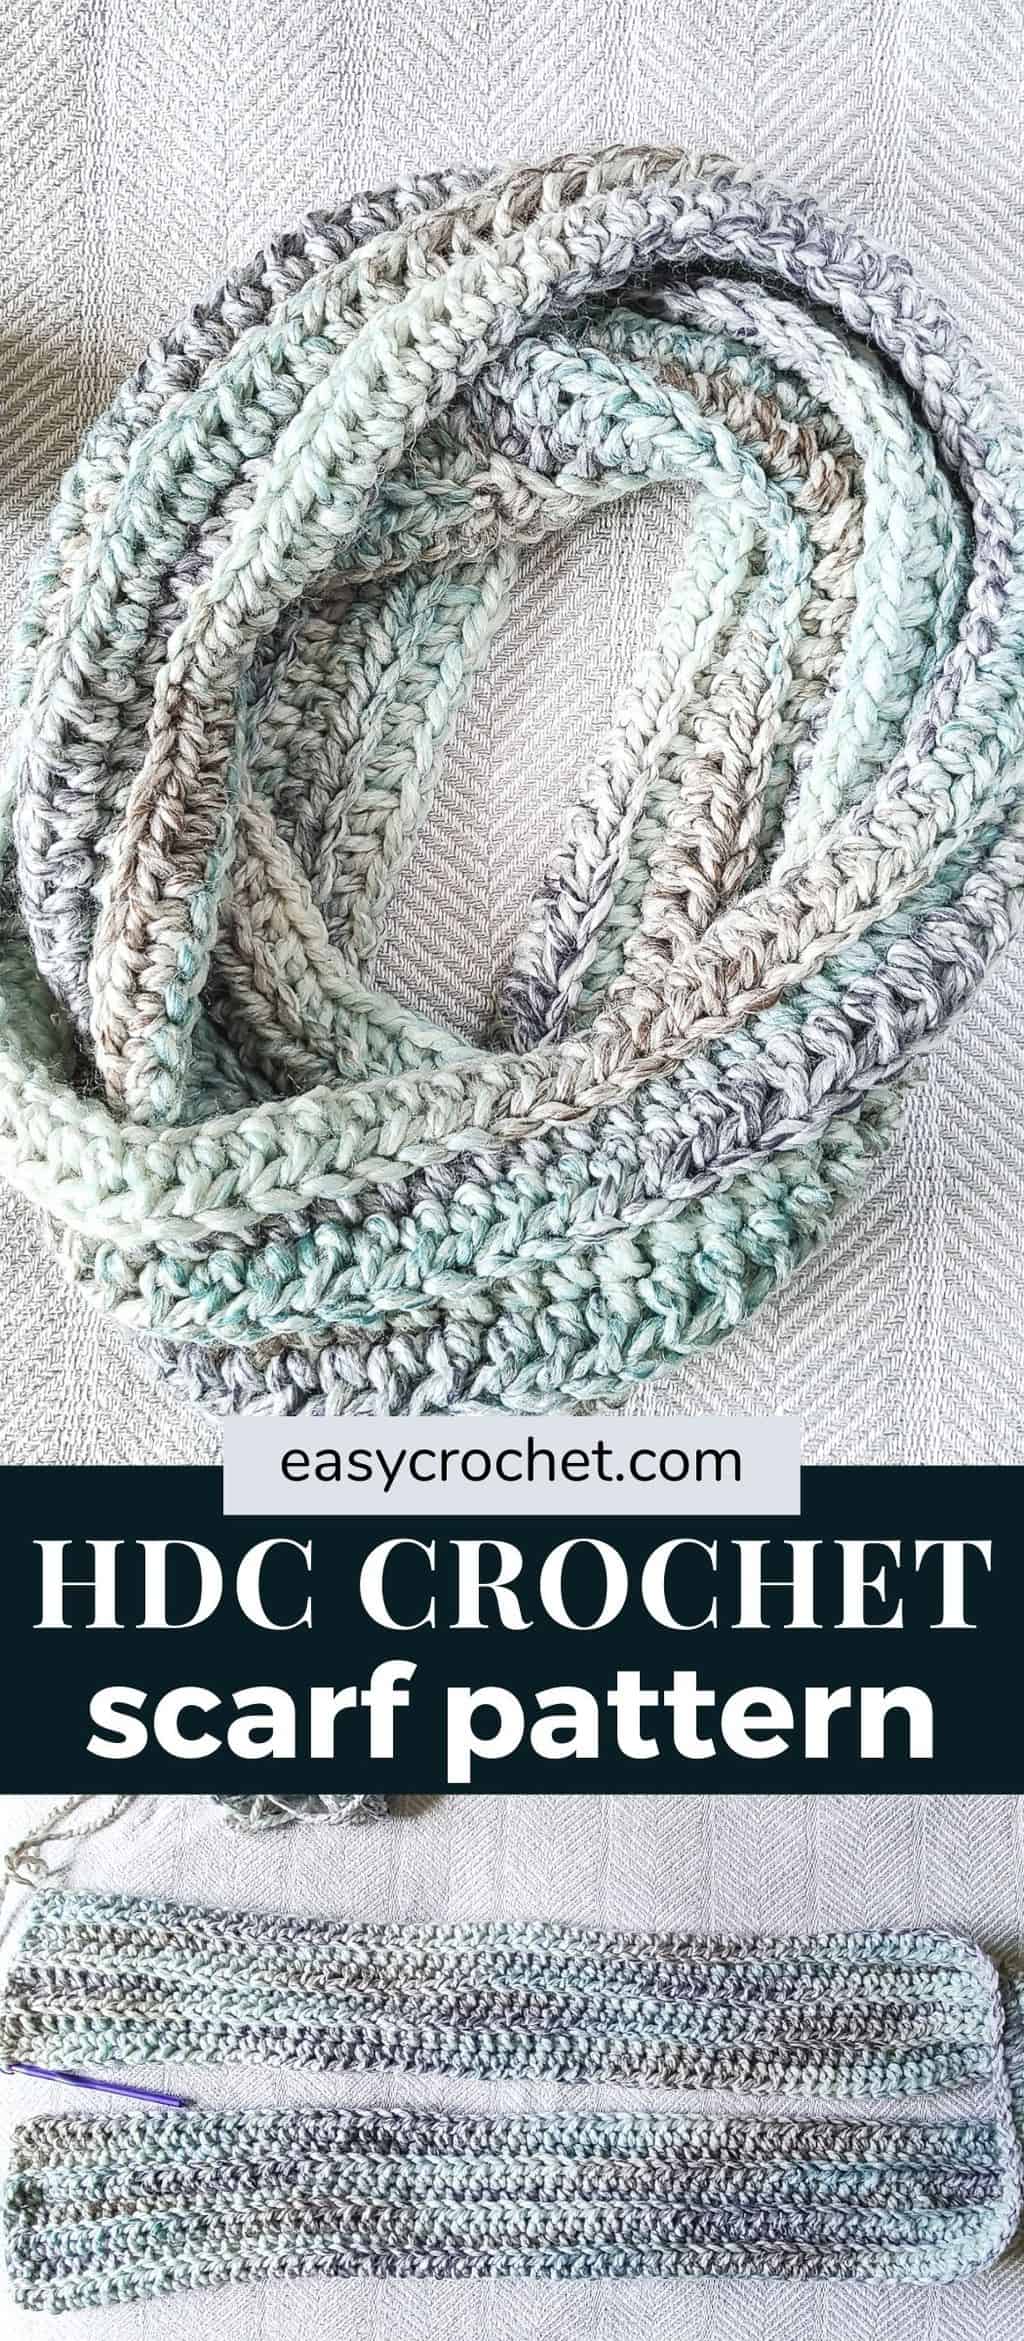 Half double crochet scarf pattern or HDC scarf pattern free from easycrochet.com via @easycrochetcom